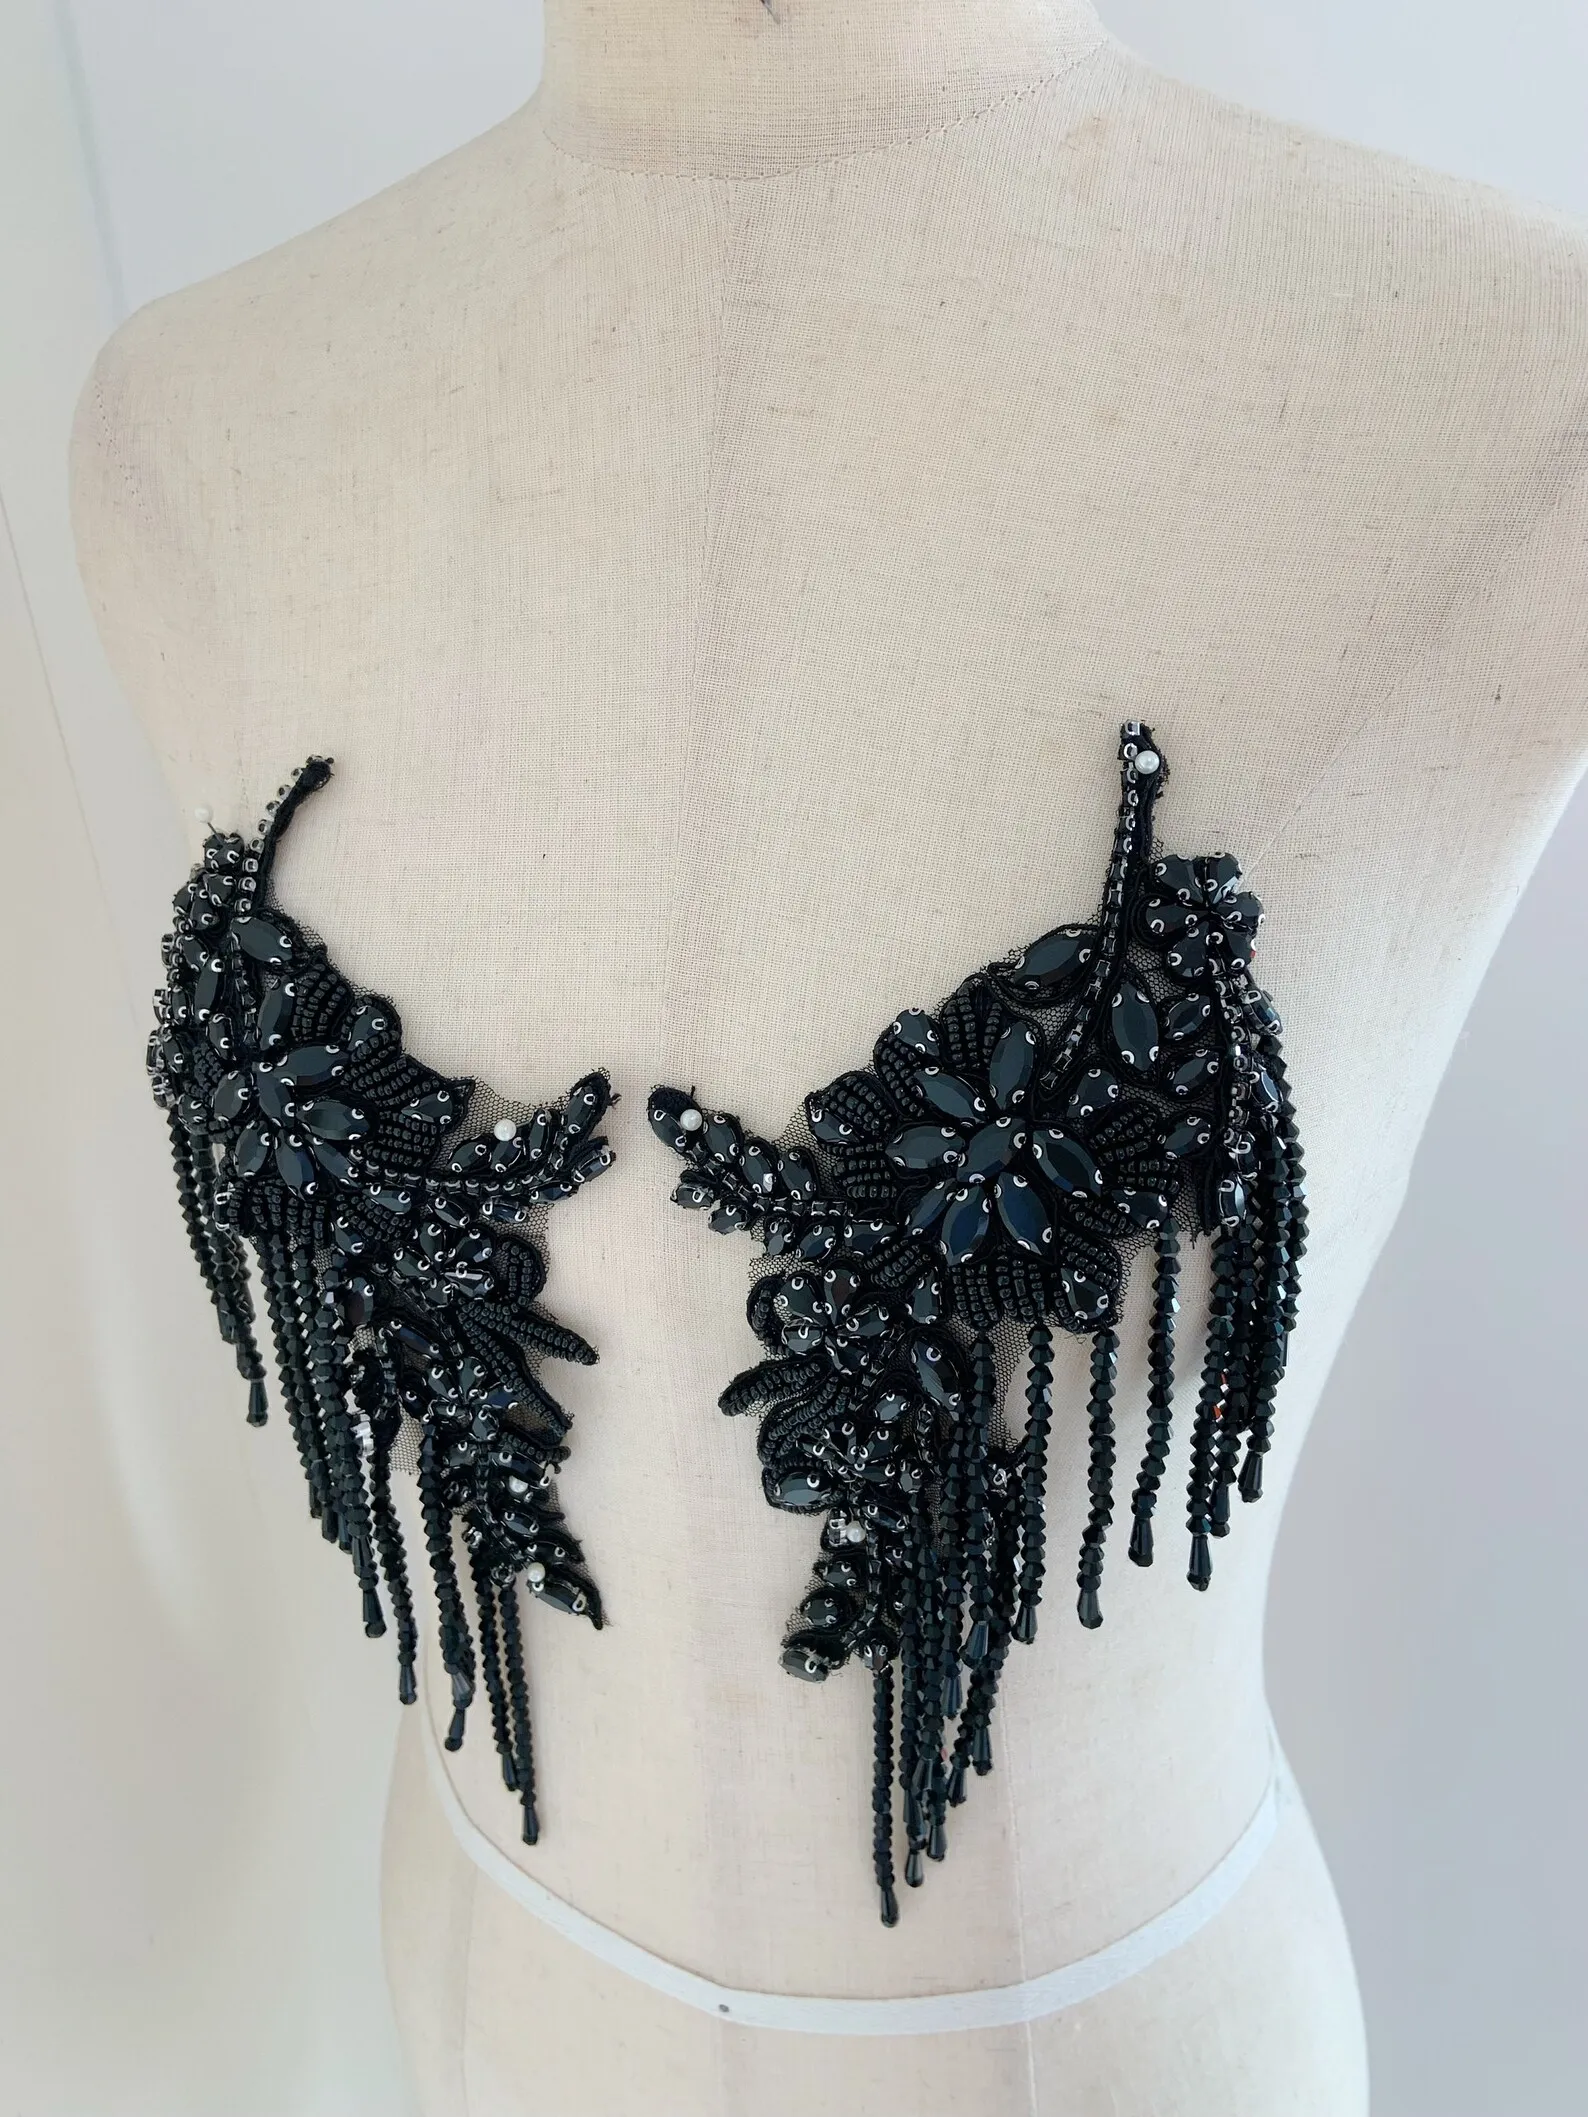 

Black Rhinestone Tassel Chains Applique Fringe Bodice Patch for Neckline,Shoulder Dress,Colorful Clothing Decor,Sew on